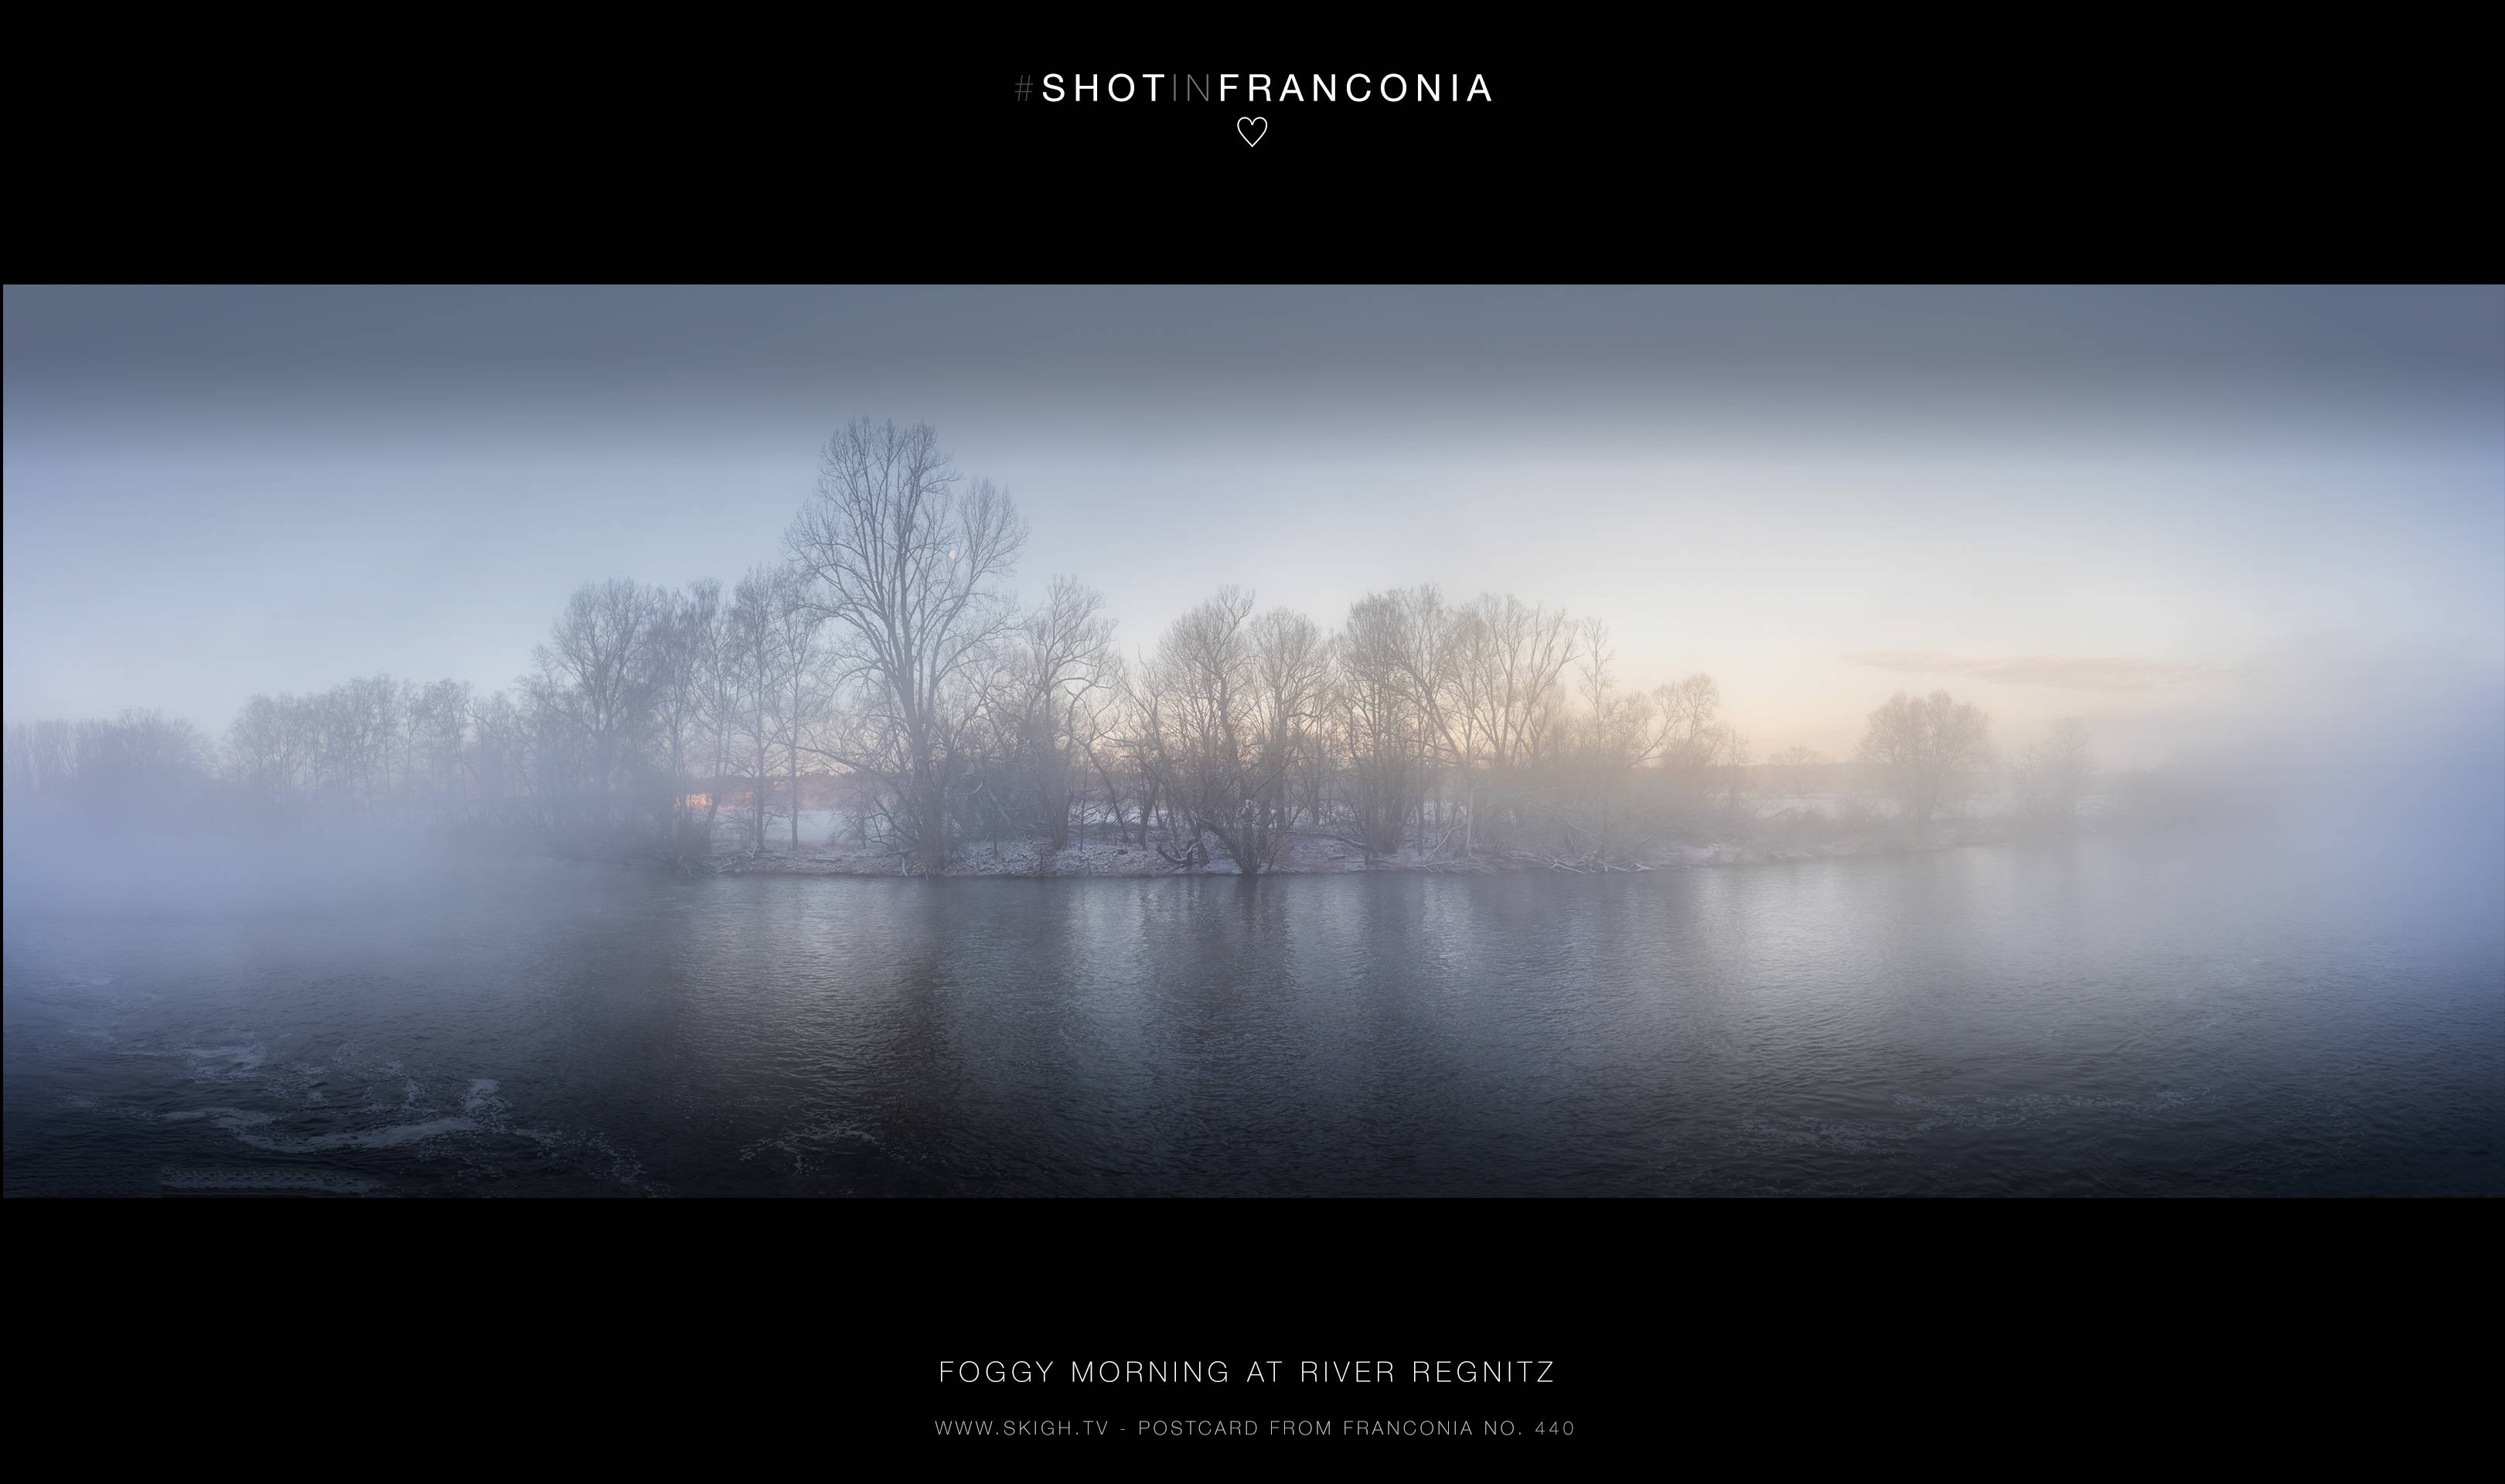 Foggy morning at River Regnitz